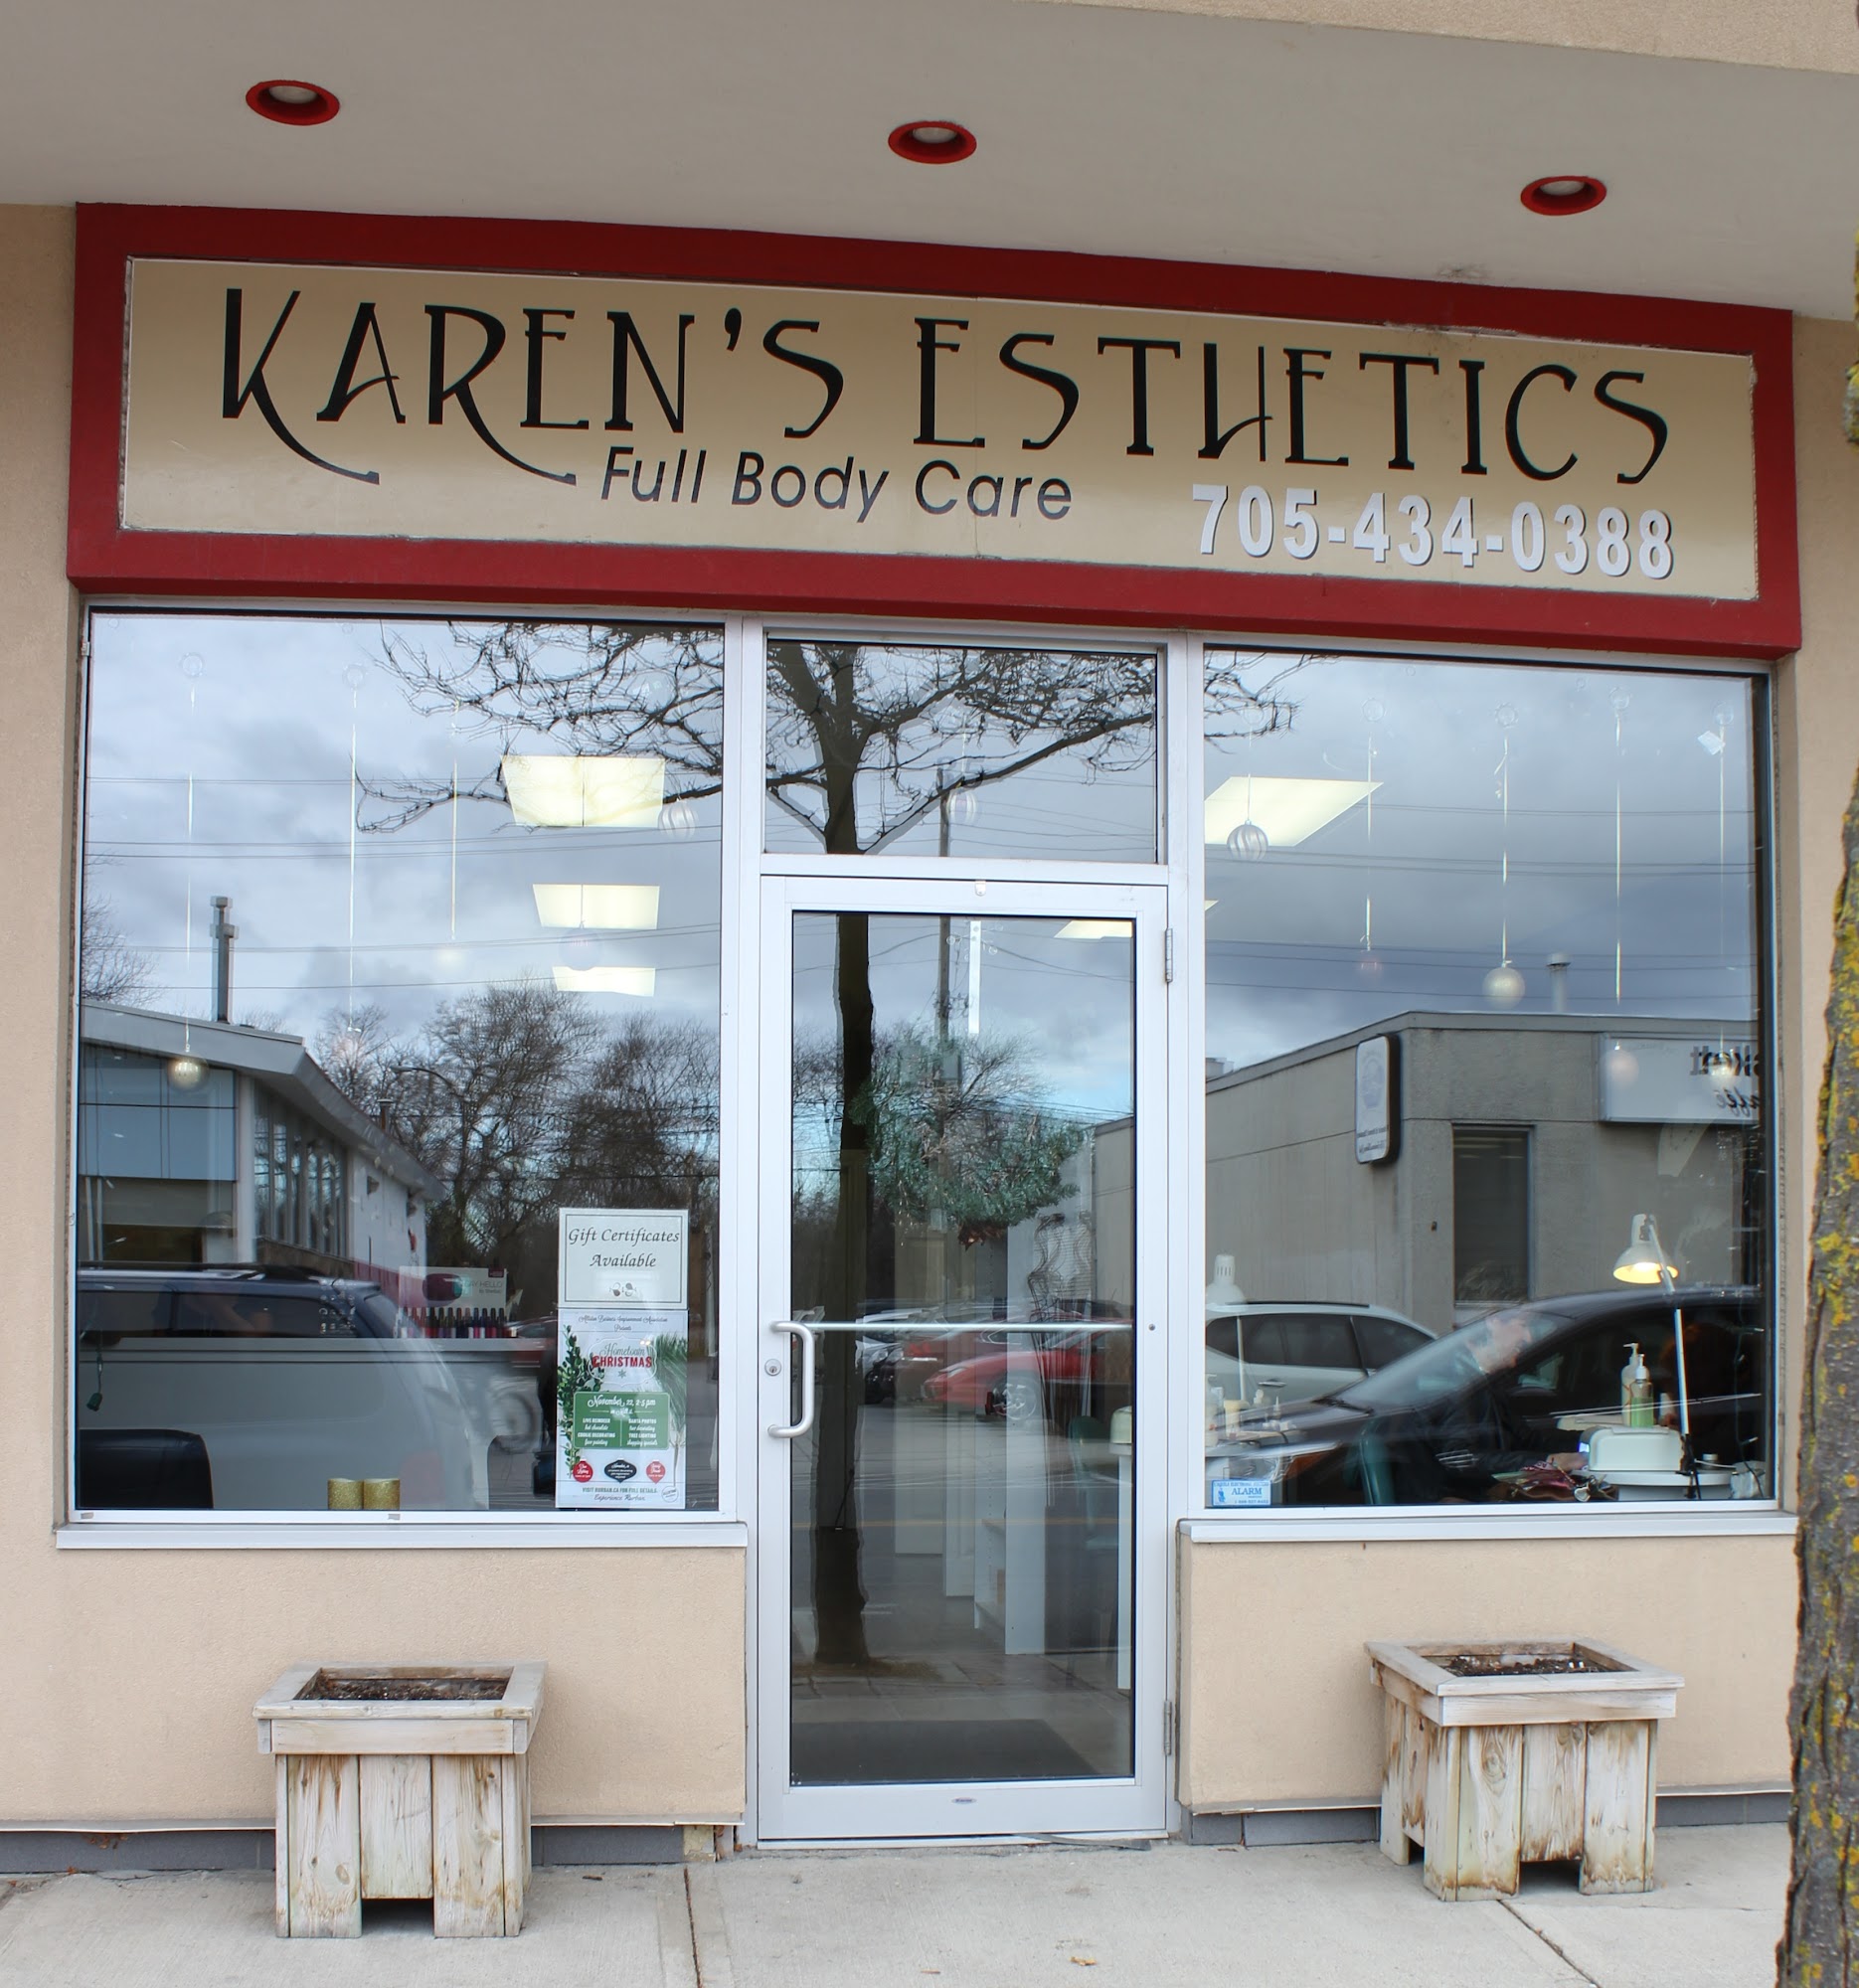 Karen's Esthetics